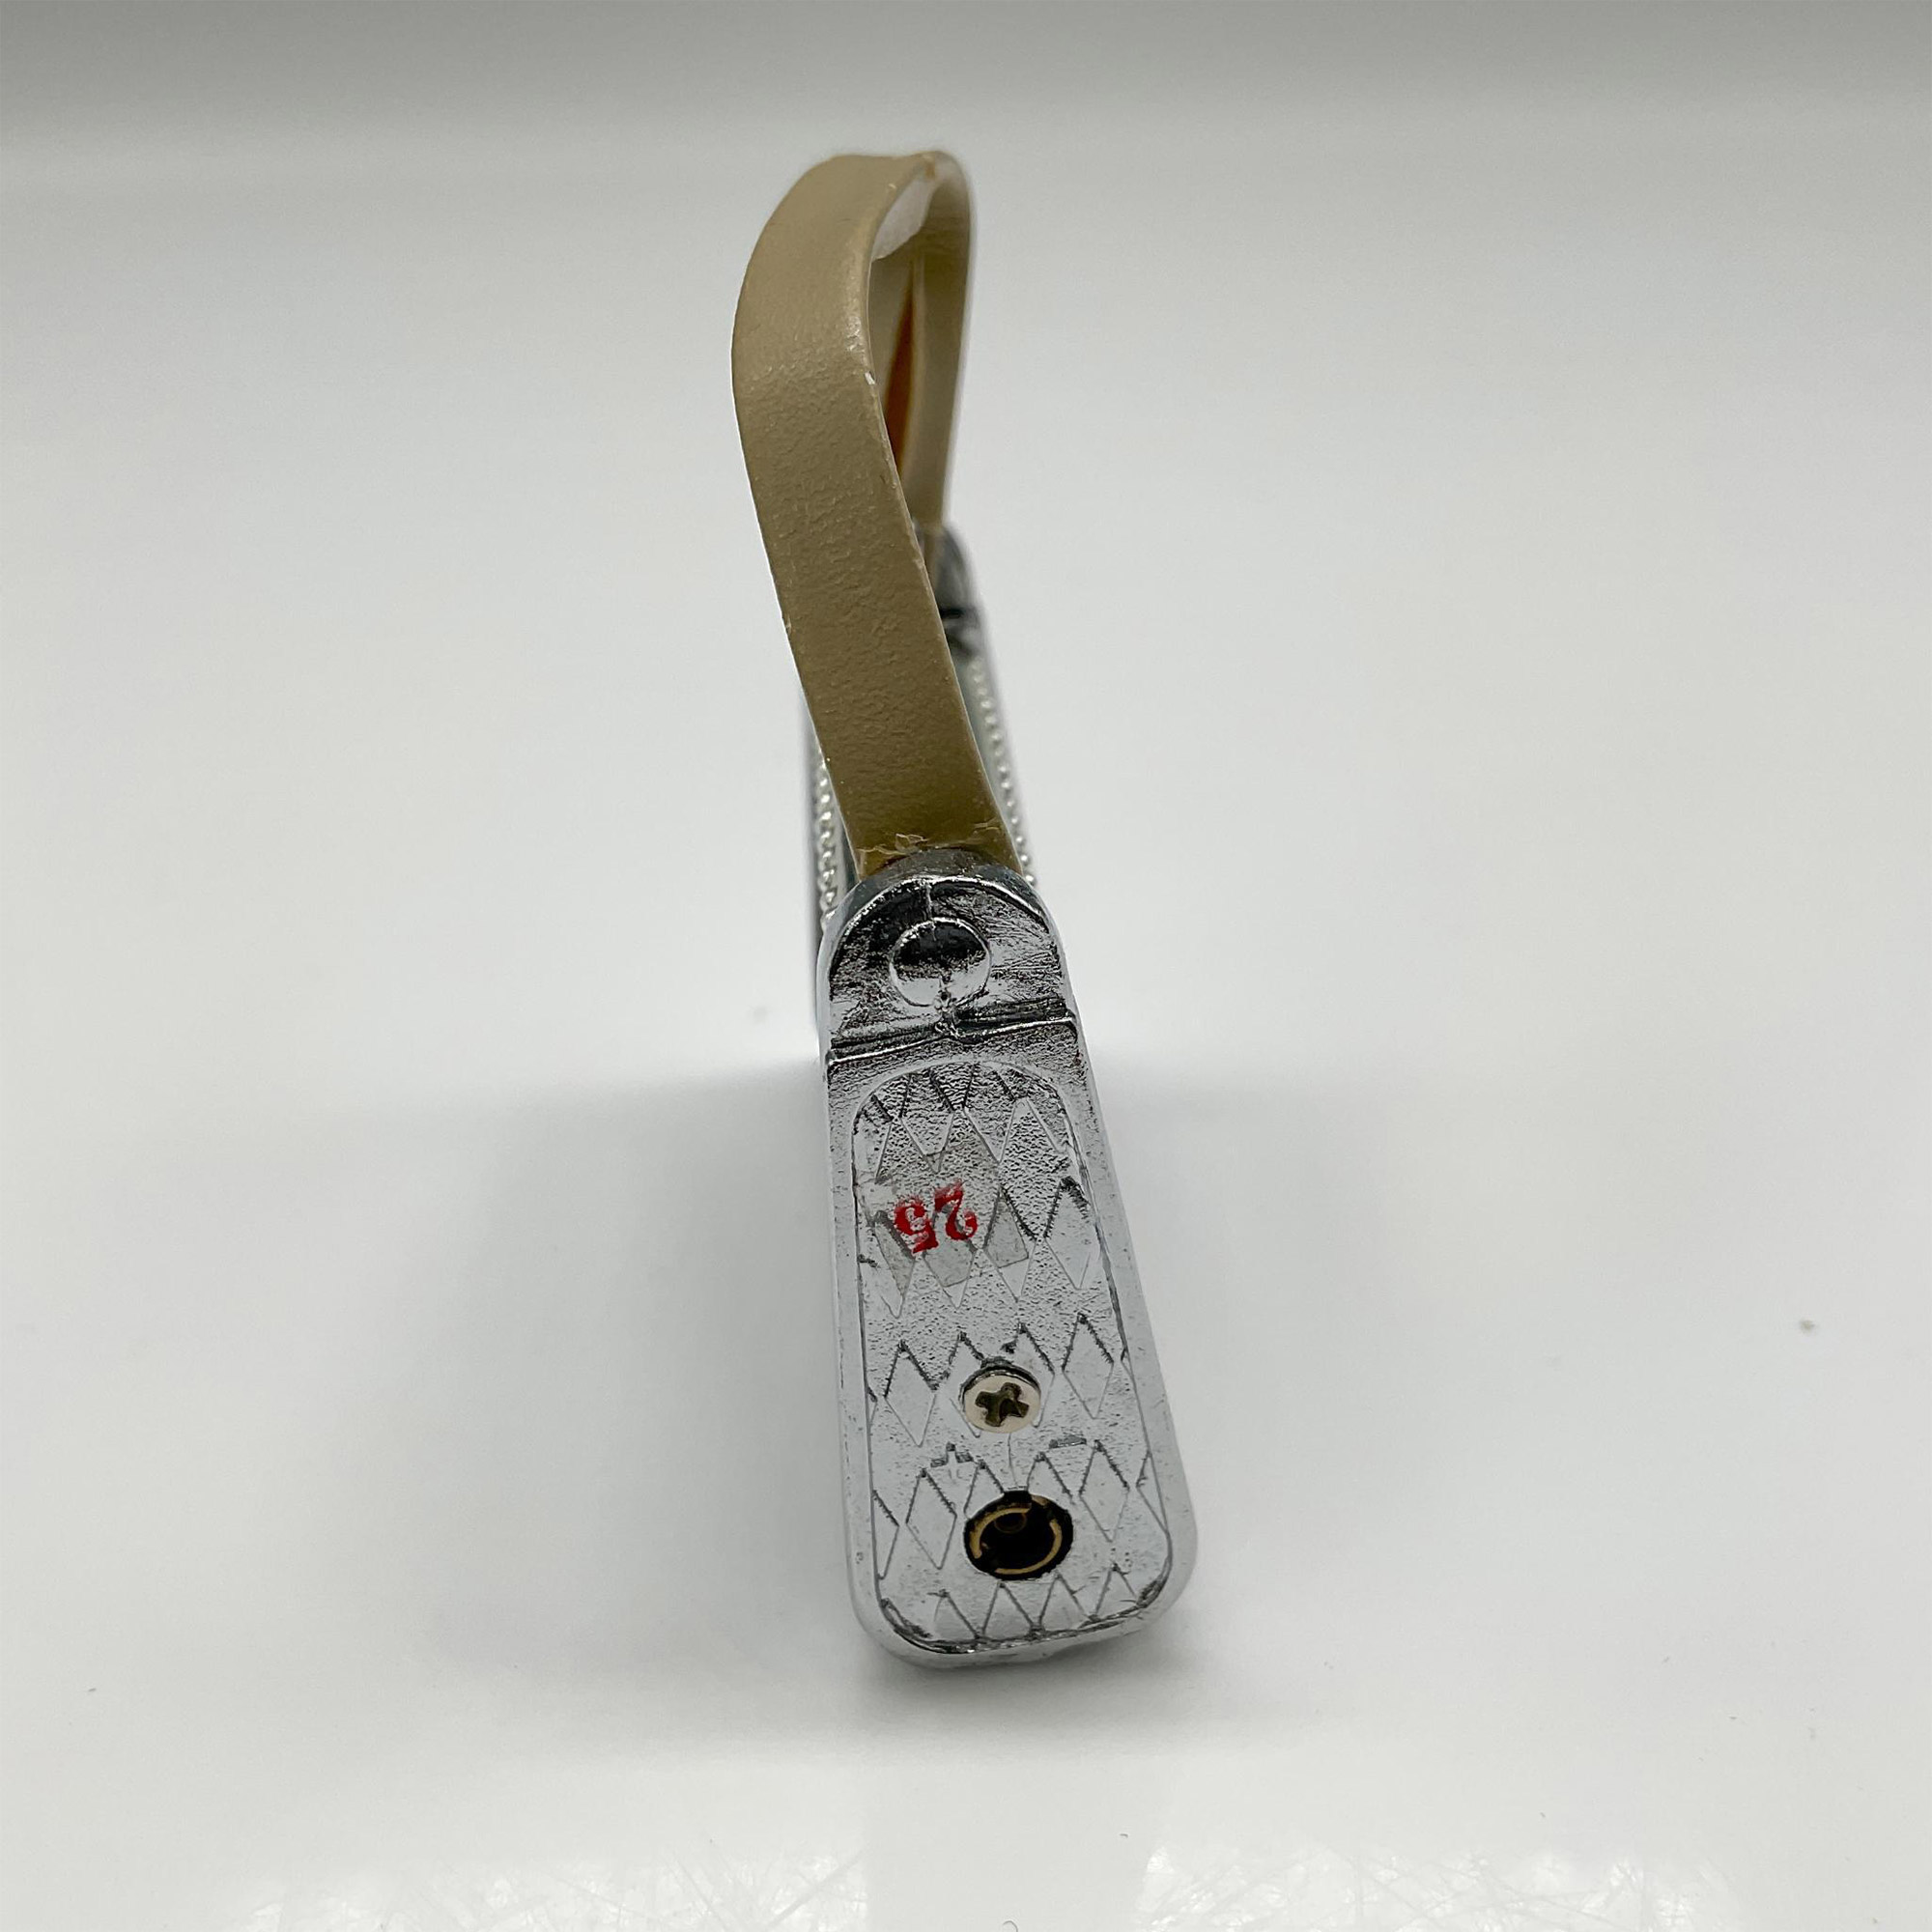 Louis Vuitton Style Miniature Lighter, Purse - Image 4 of 4